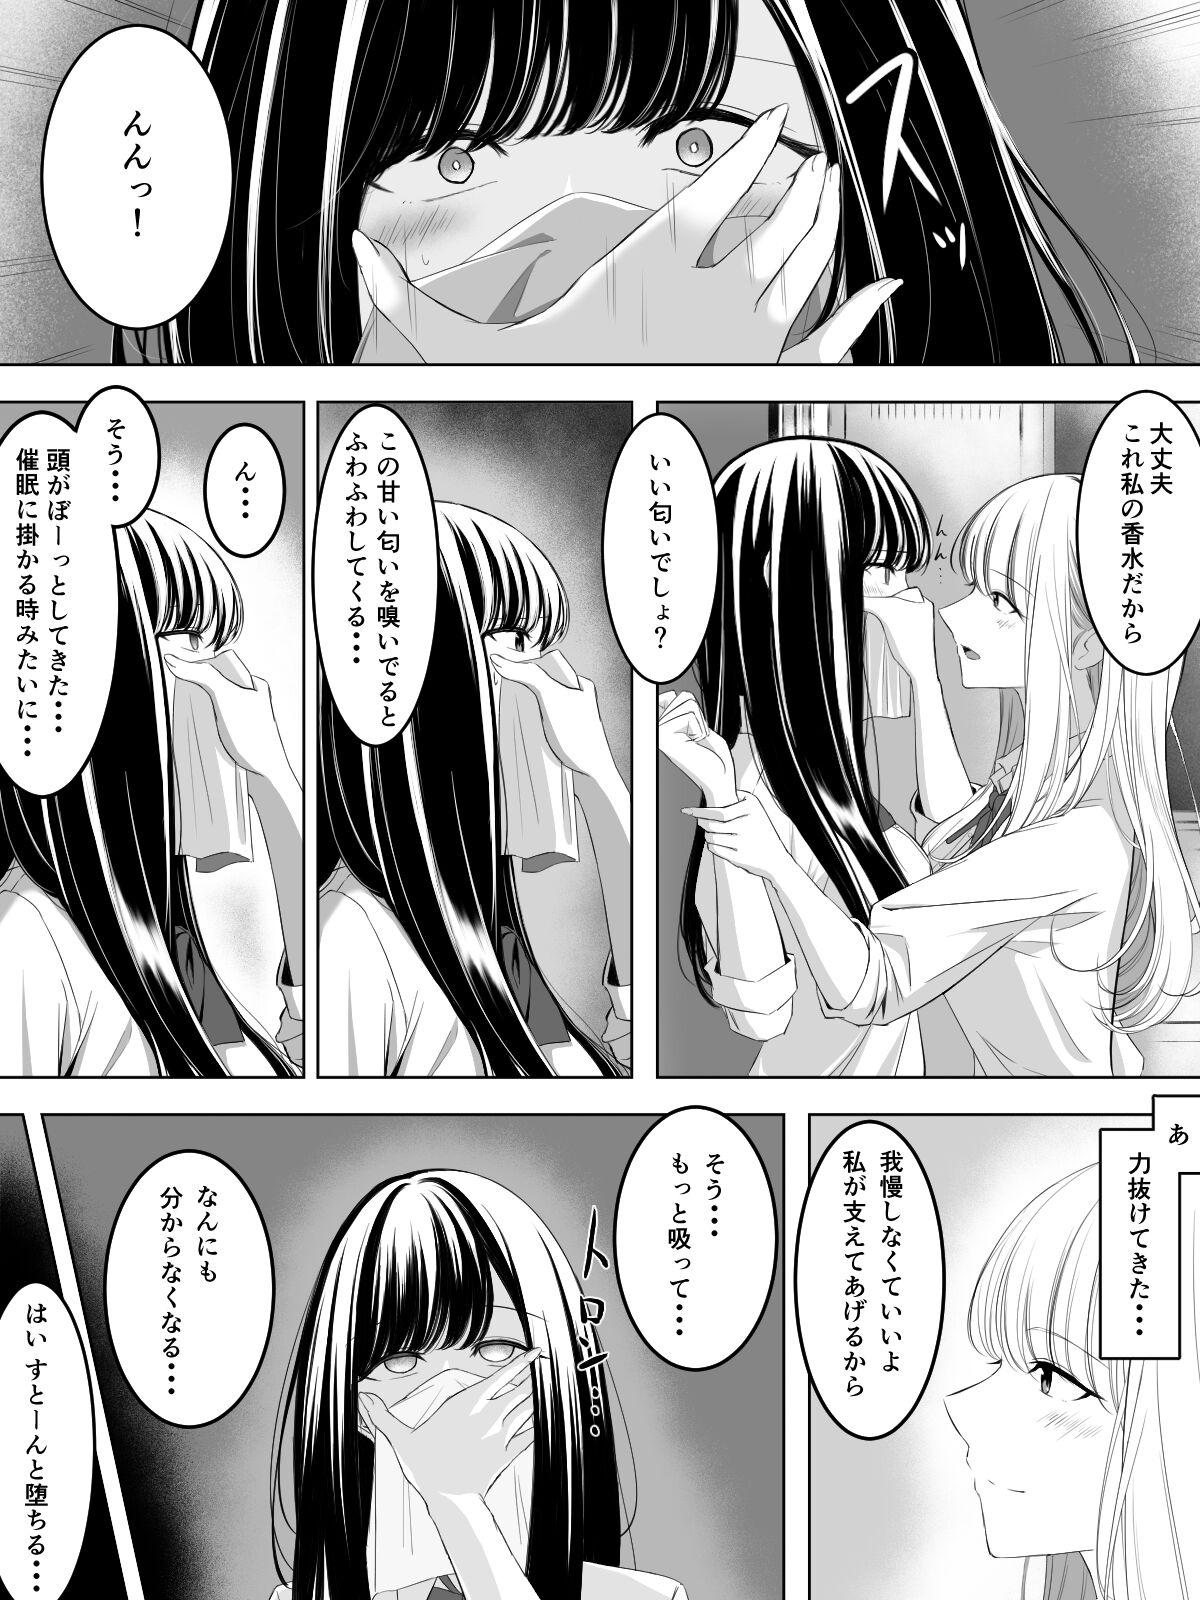 Yuri comic Part 1,2 and 3. 13